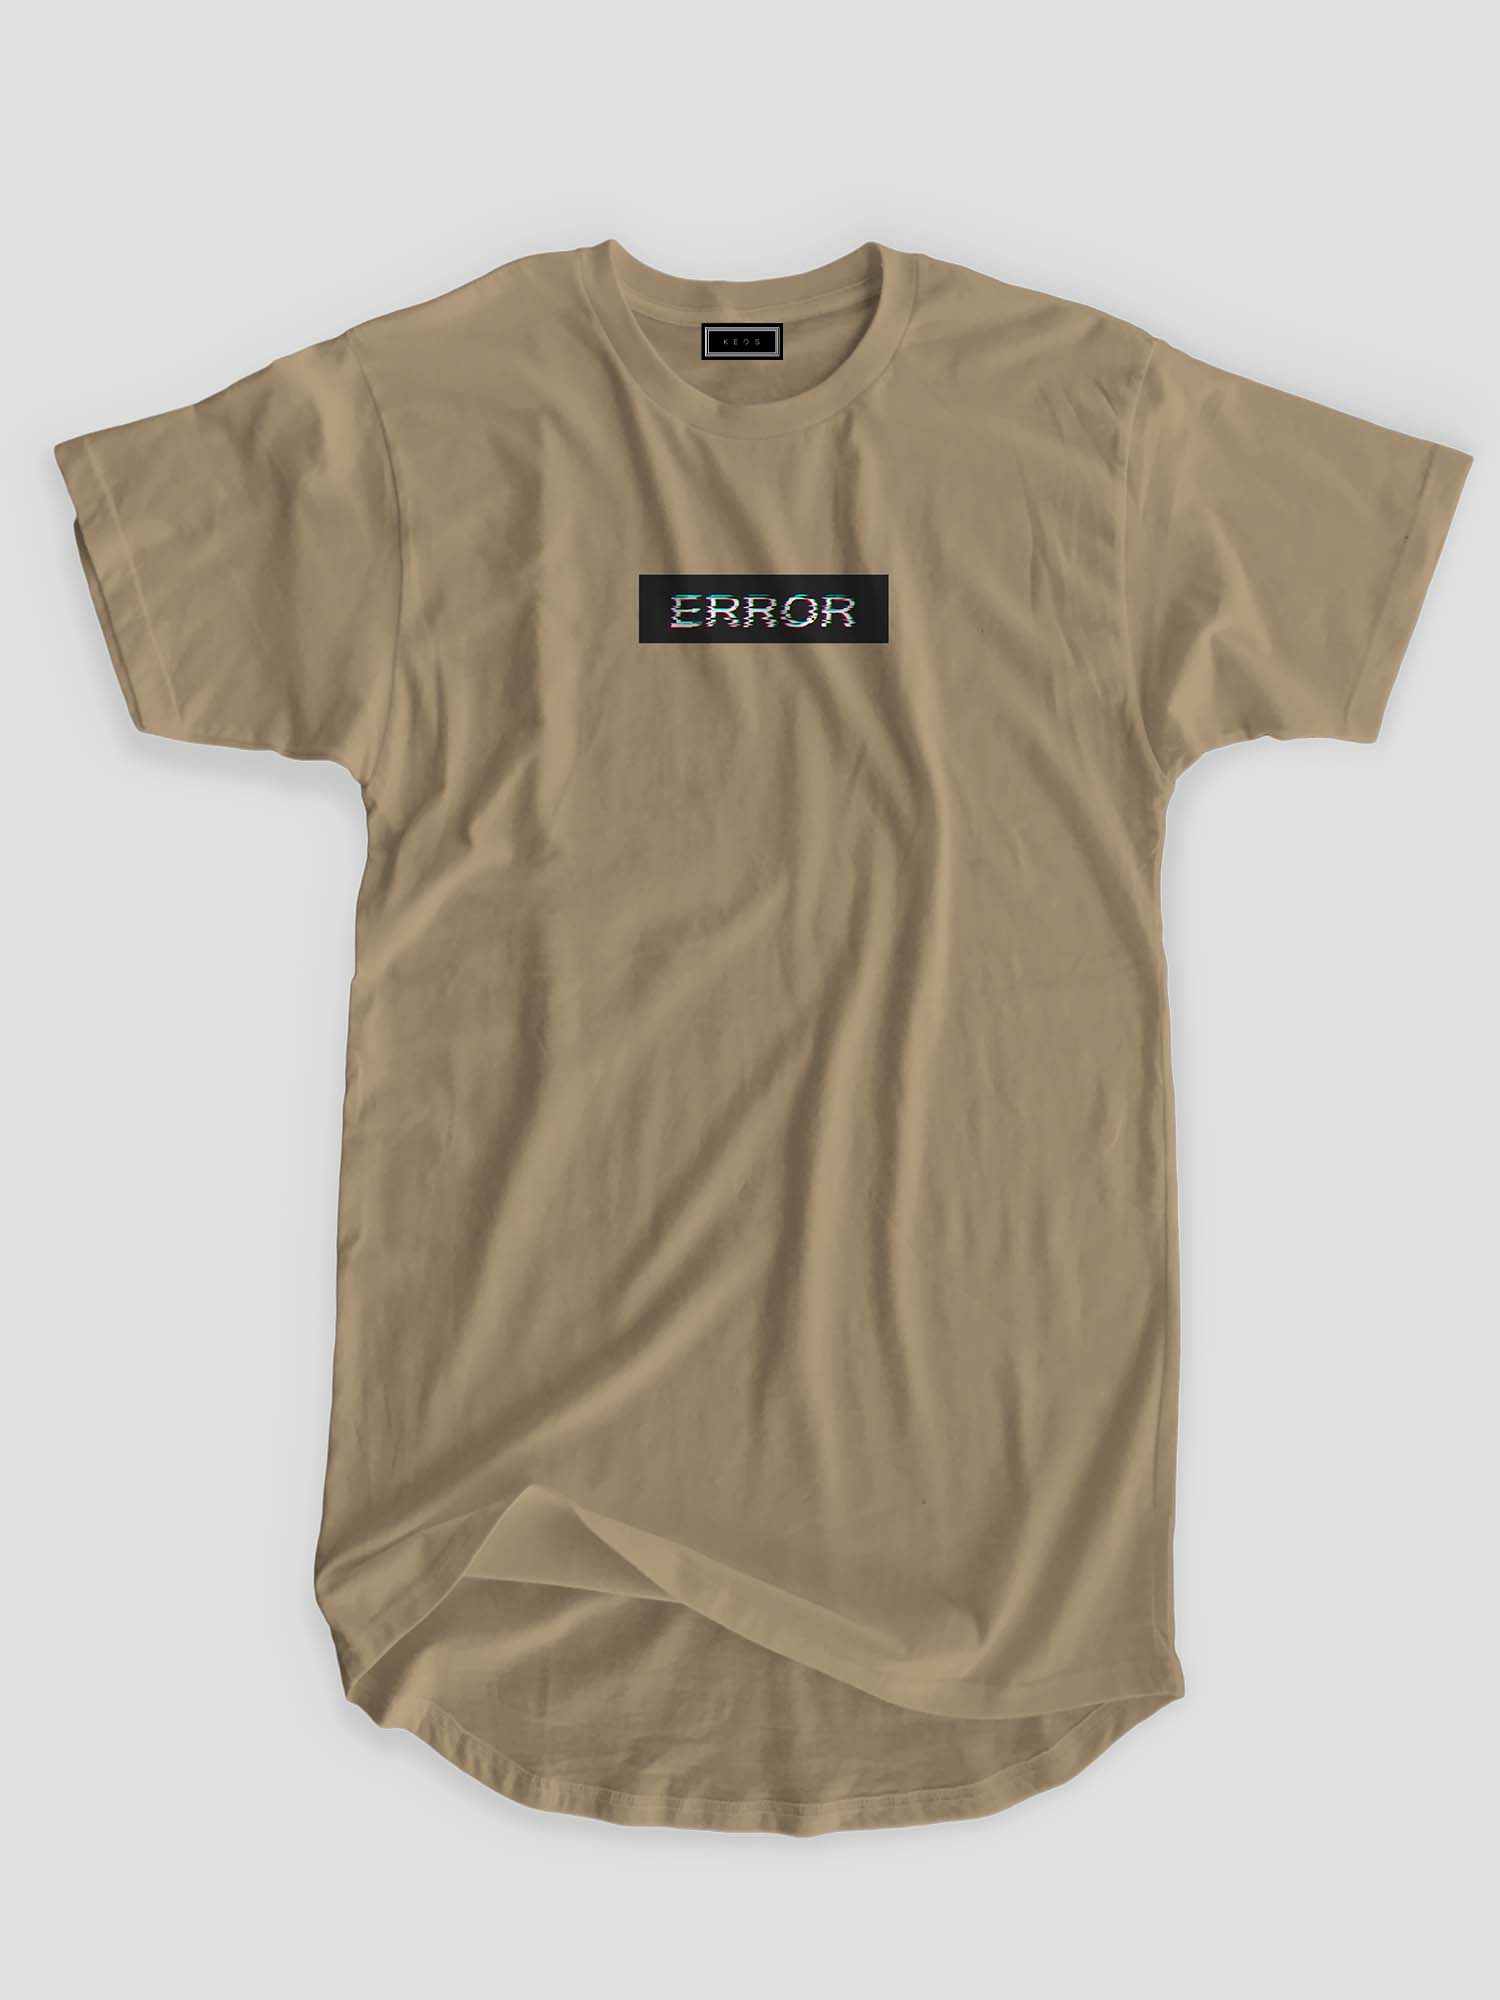 Longline Error Organic Cotton T-shirt - keos.life